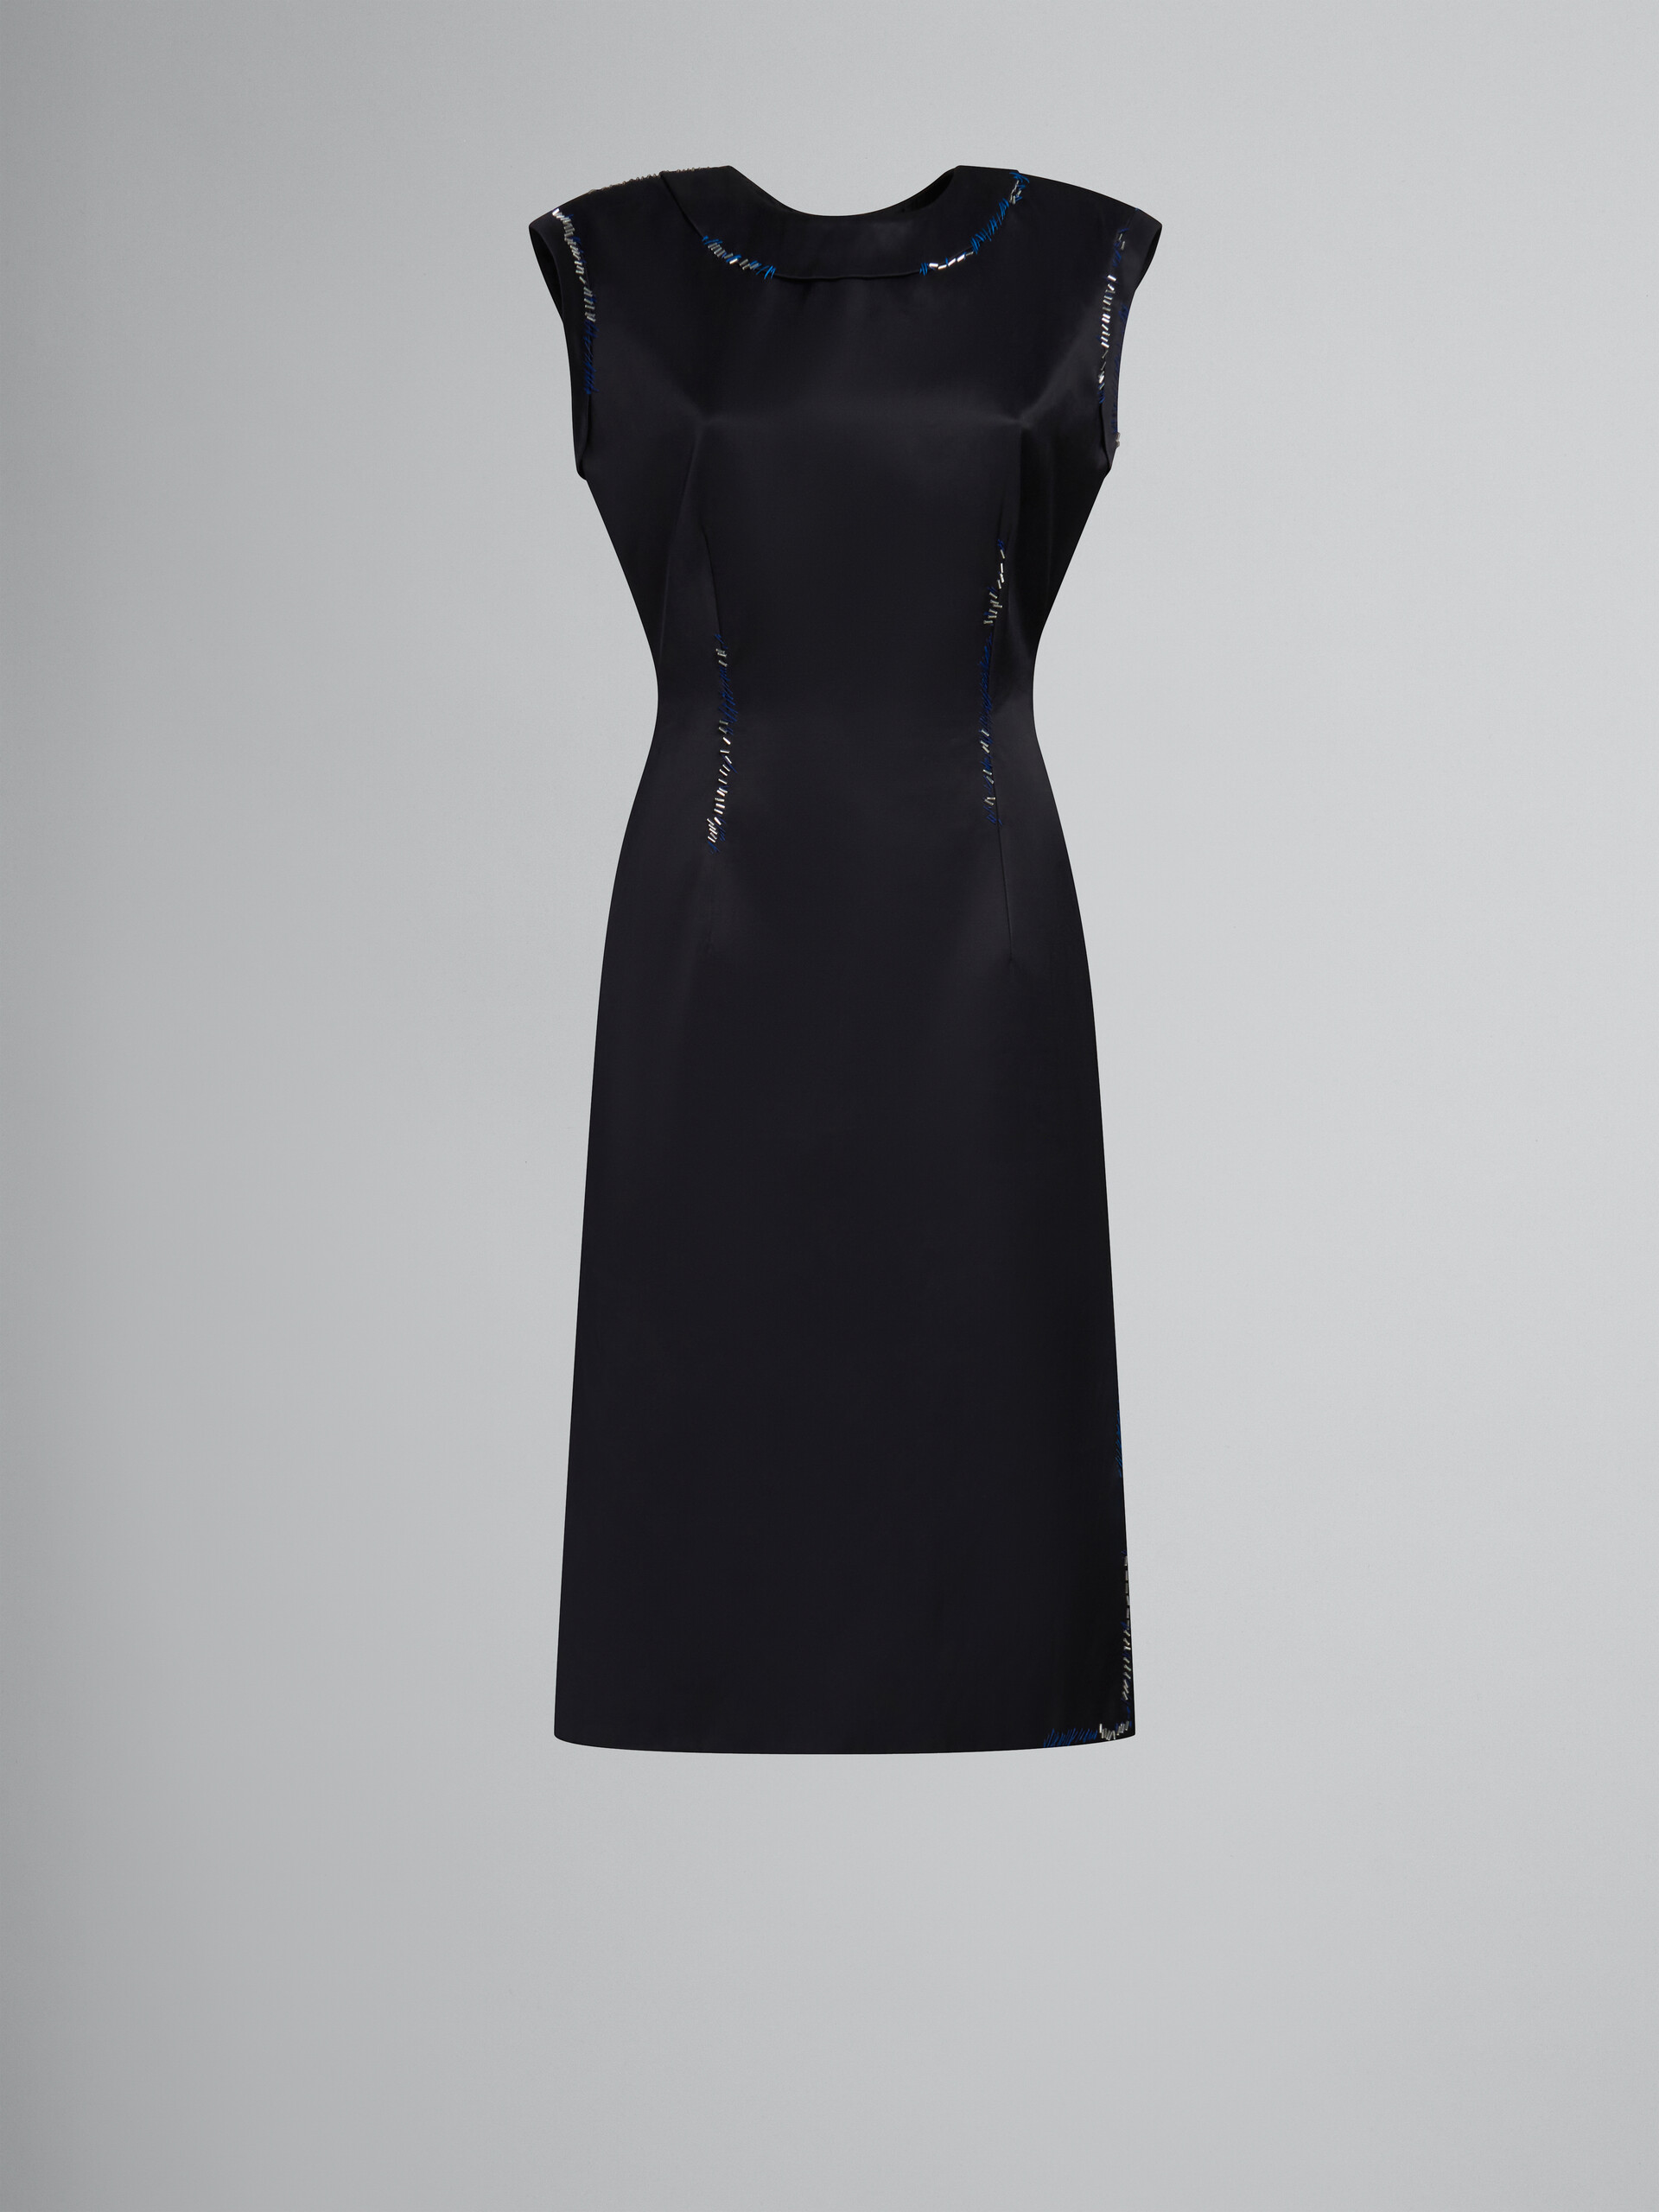 Robe fourreau en satin duchesse noir avec effet raccommodé en perles - Robes - Image 1